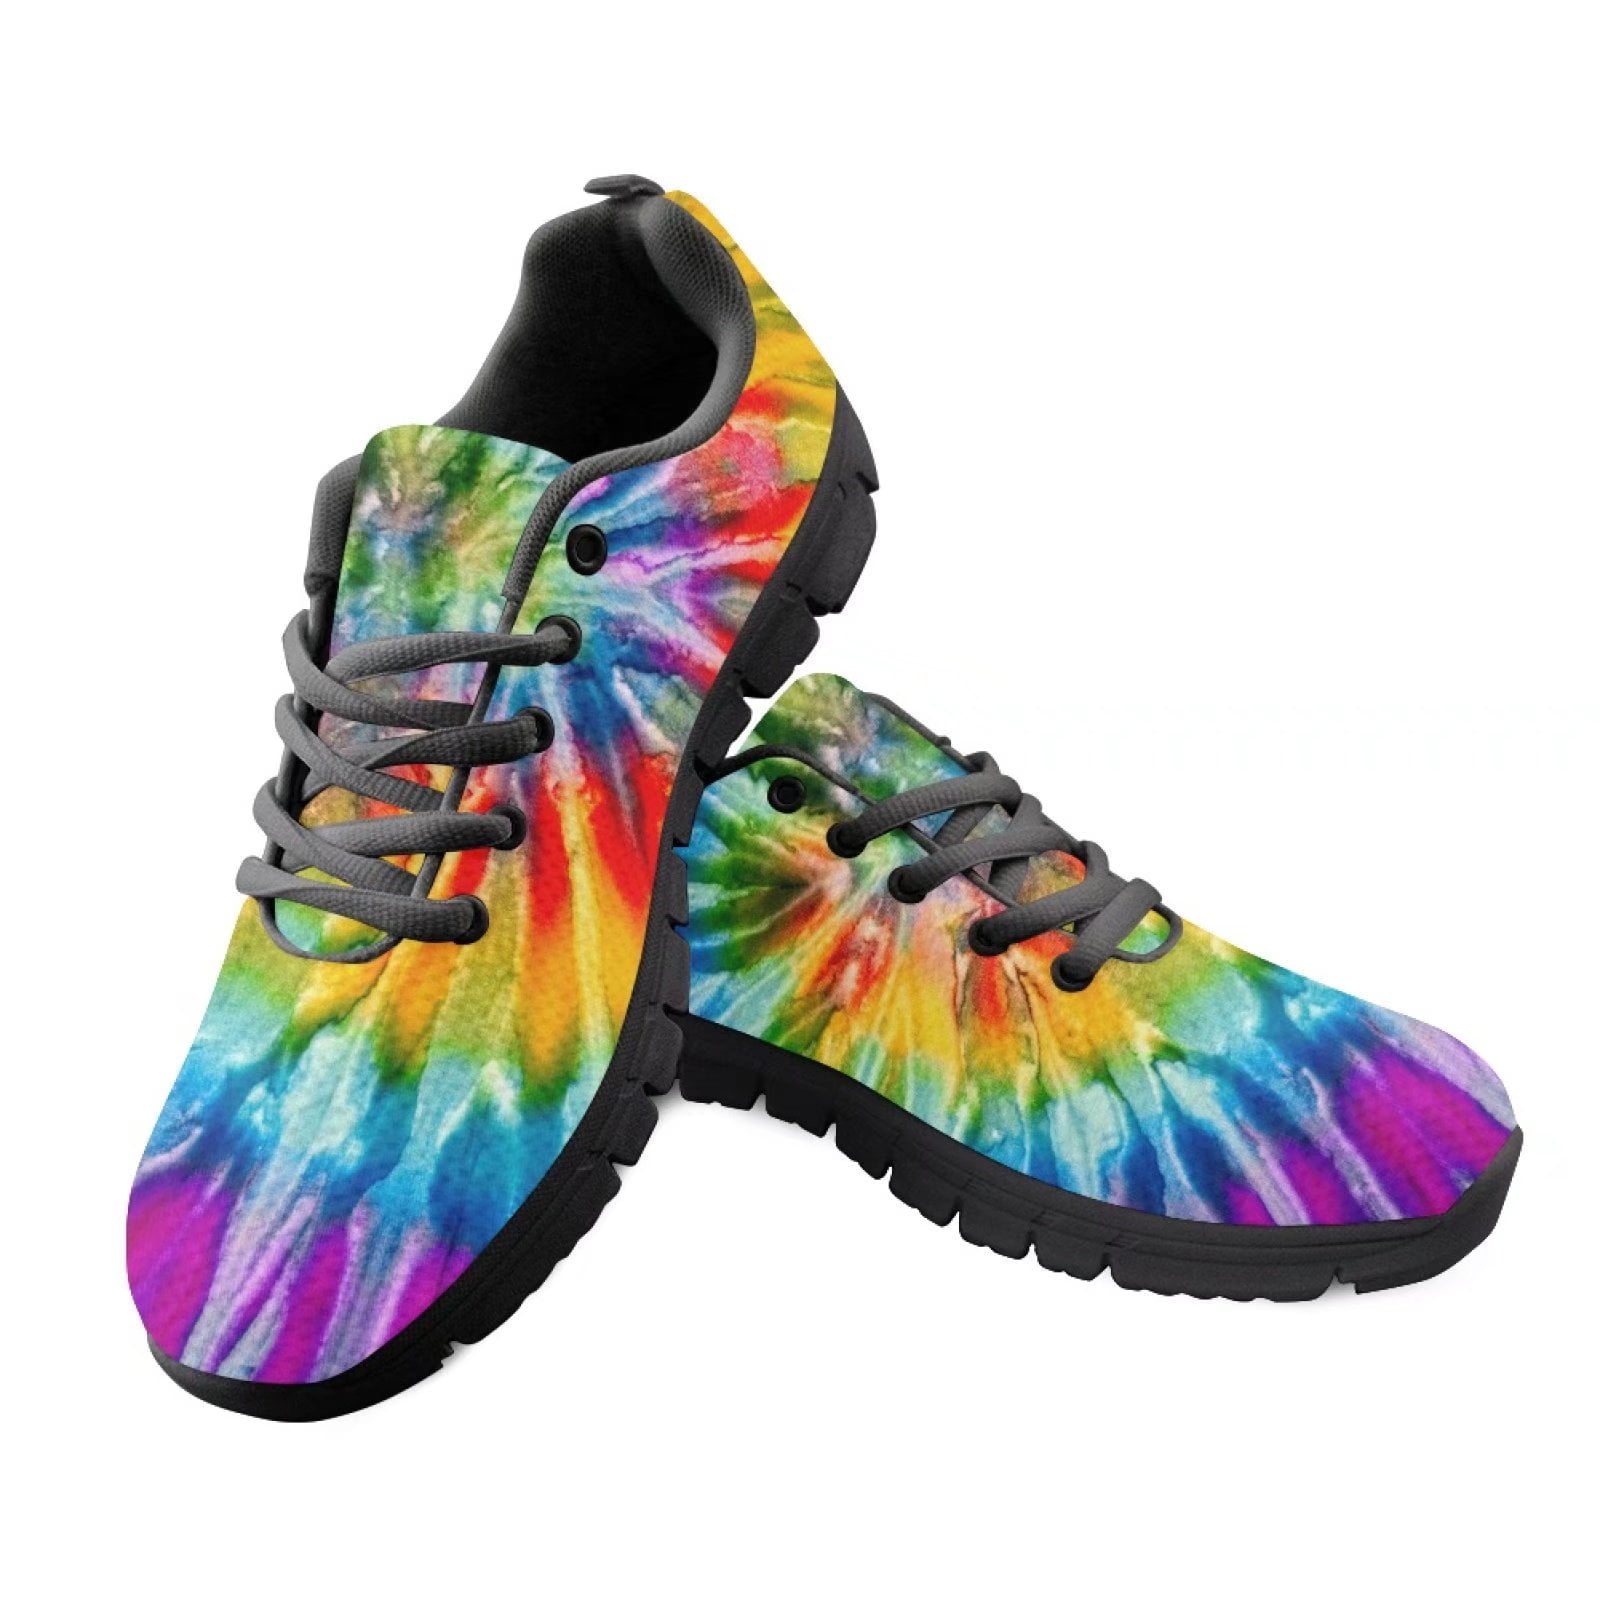 Renewold Colorful Tie-Dye Print Shoes for Women Men Running Sneakers  Comfort Sports Walking Tennis Shoes Gifts for Boy Girl Size 7.5 -  Walmart.com